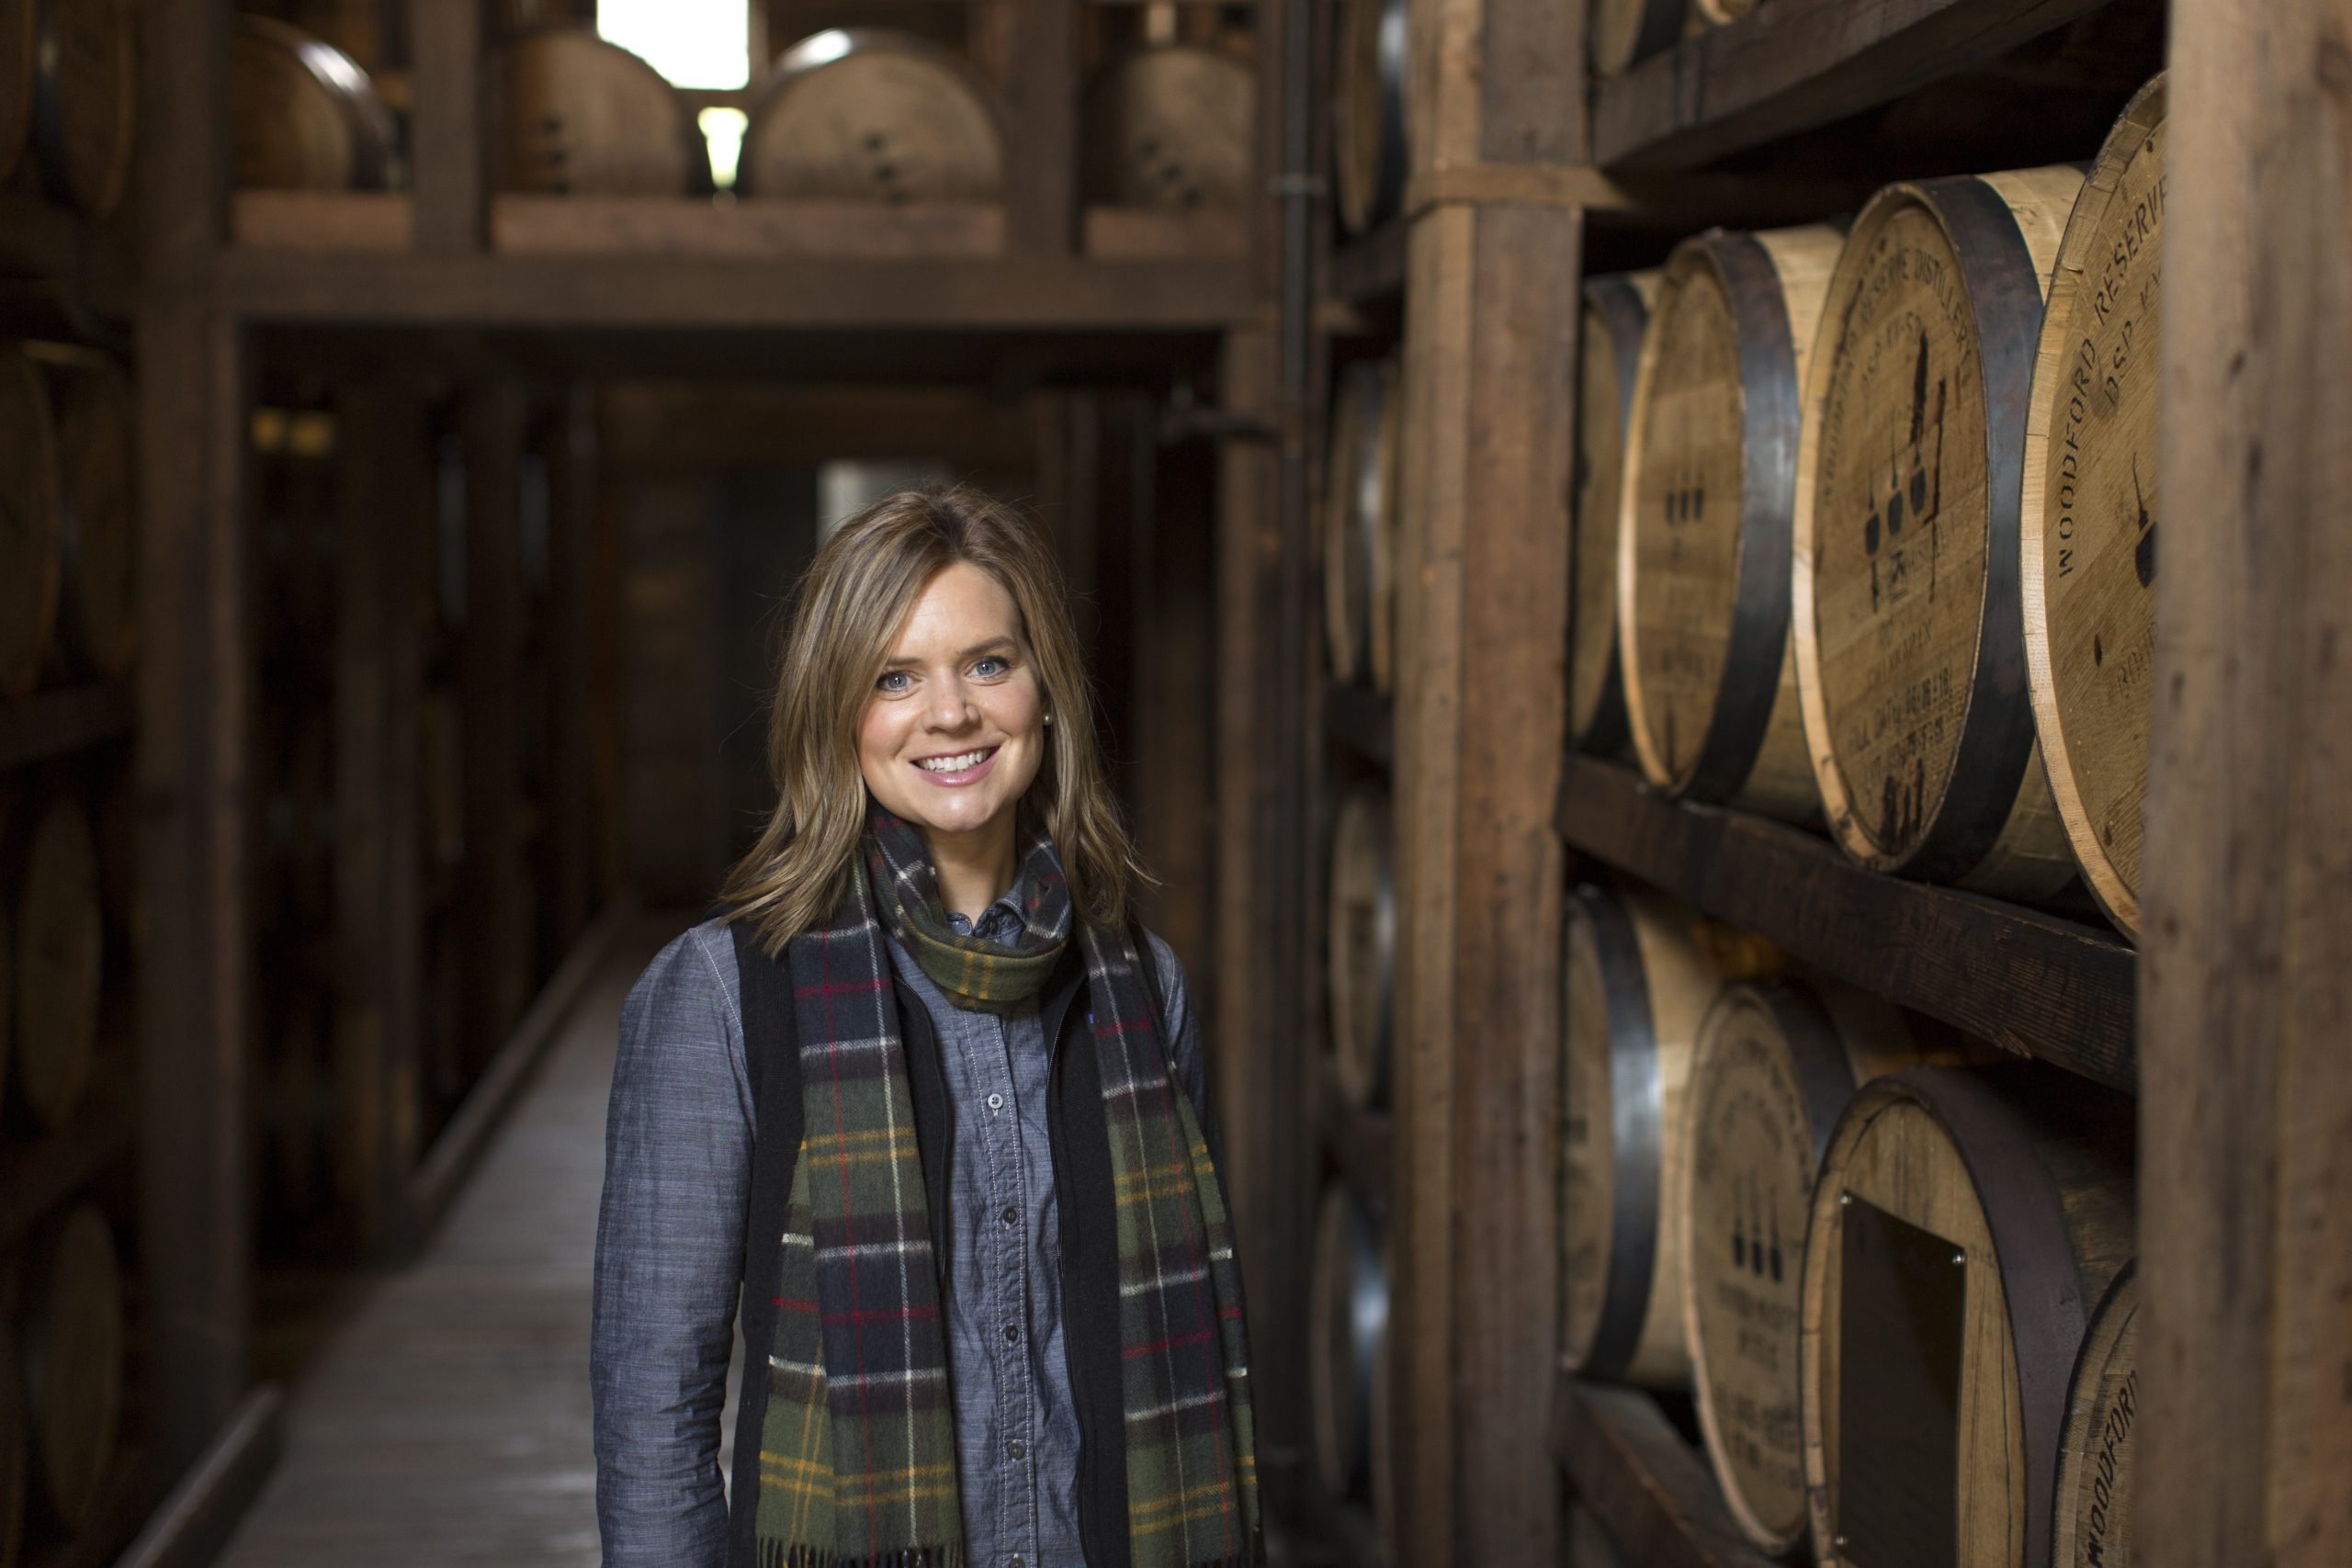 Elizabeth McCall, assistant master whiskey distiller at Woodford Reserve